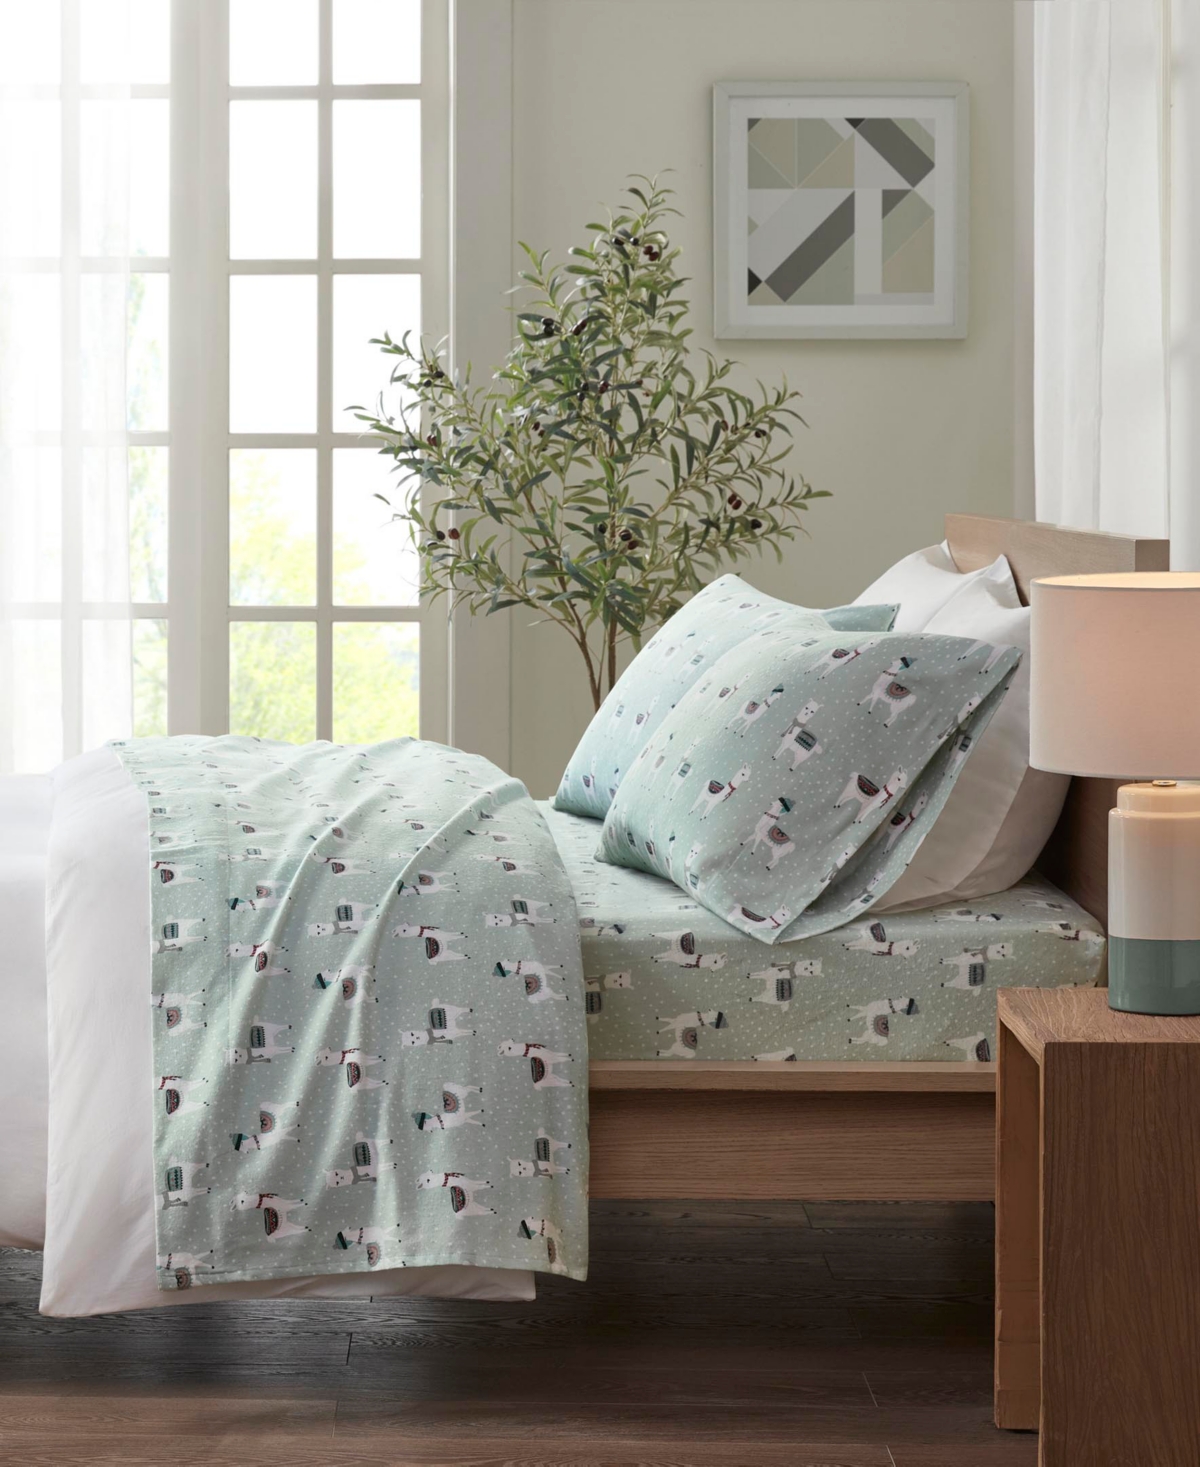 Sleep Philosophy True North By  Novelty Printed Cotton Flannel 4-pc. Sheet Set, Full Bedding In Seafoam Llama